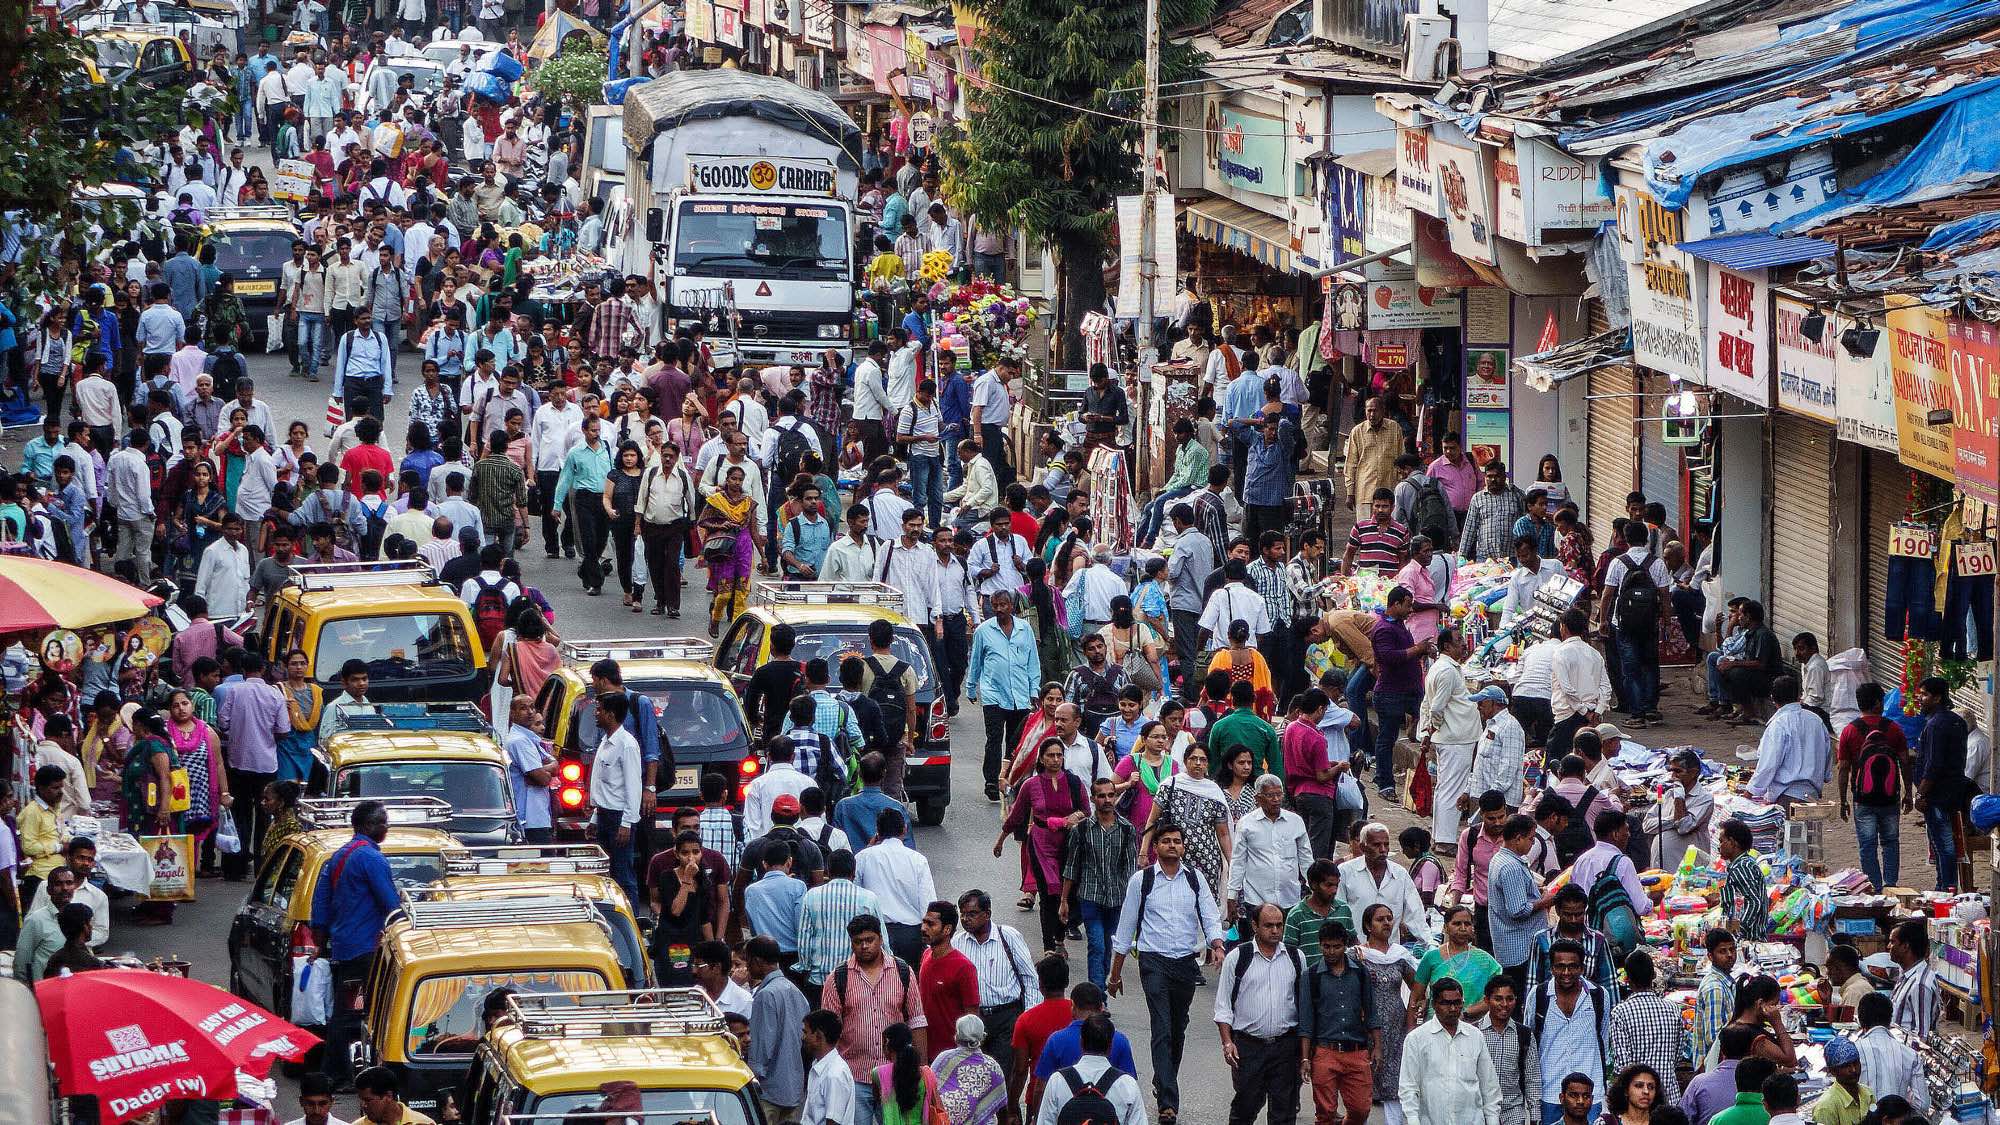 Wêreldbevolking ongelukkig vinnig oppad na 8 mijard mense; Indië besig om China verby te steek